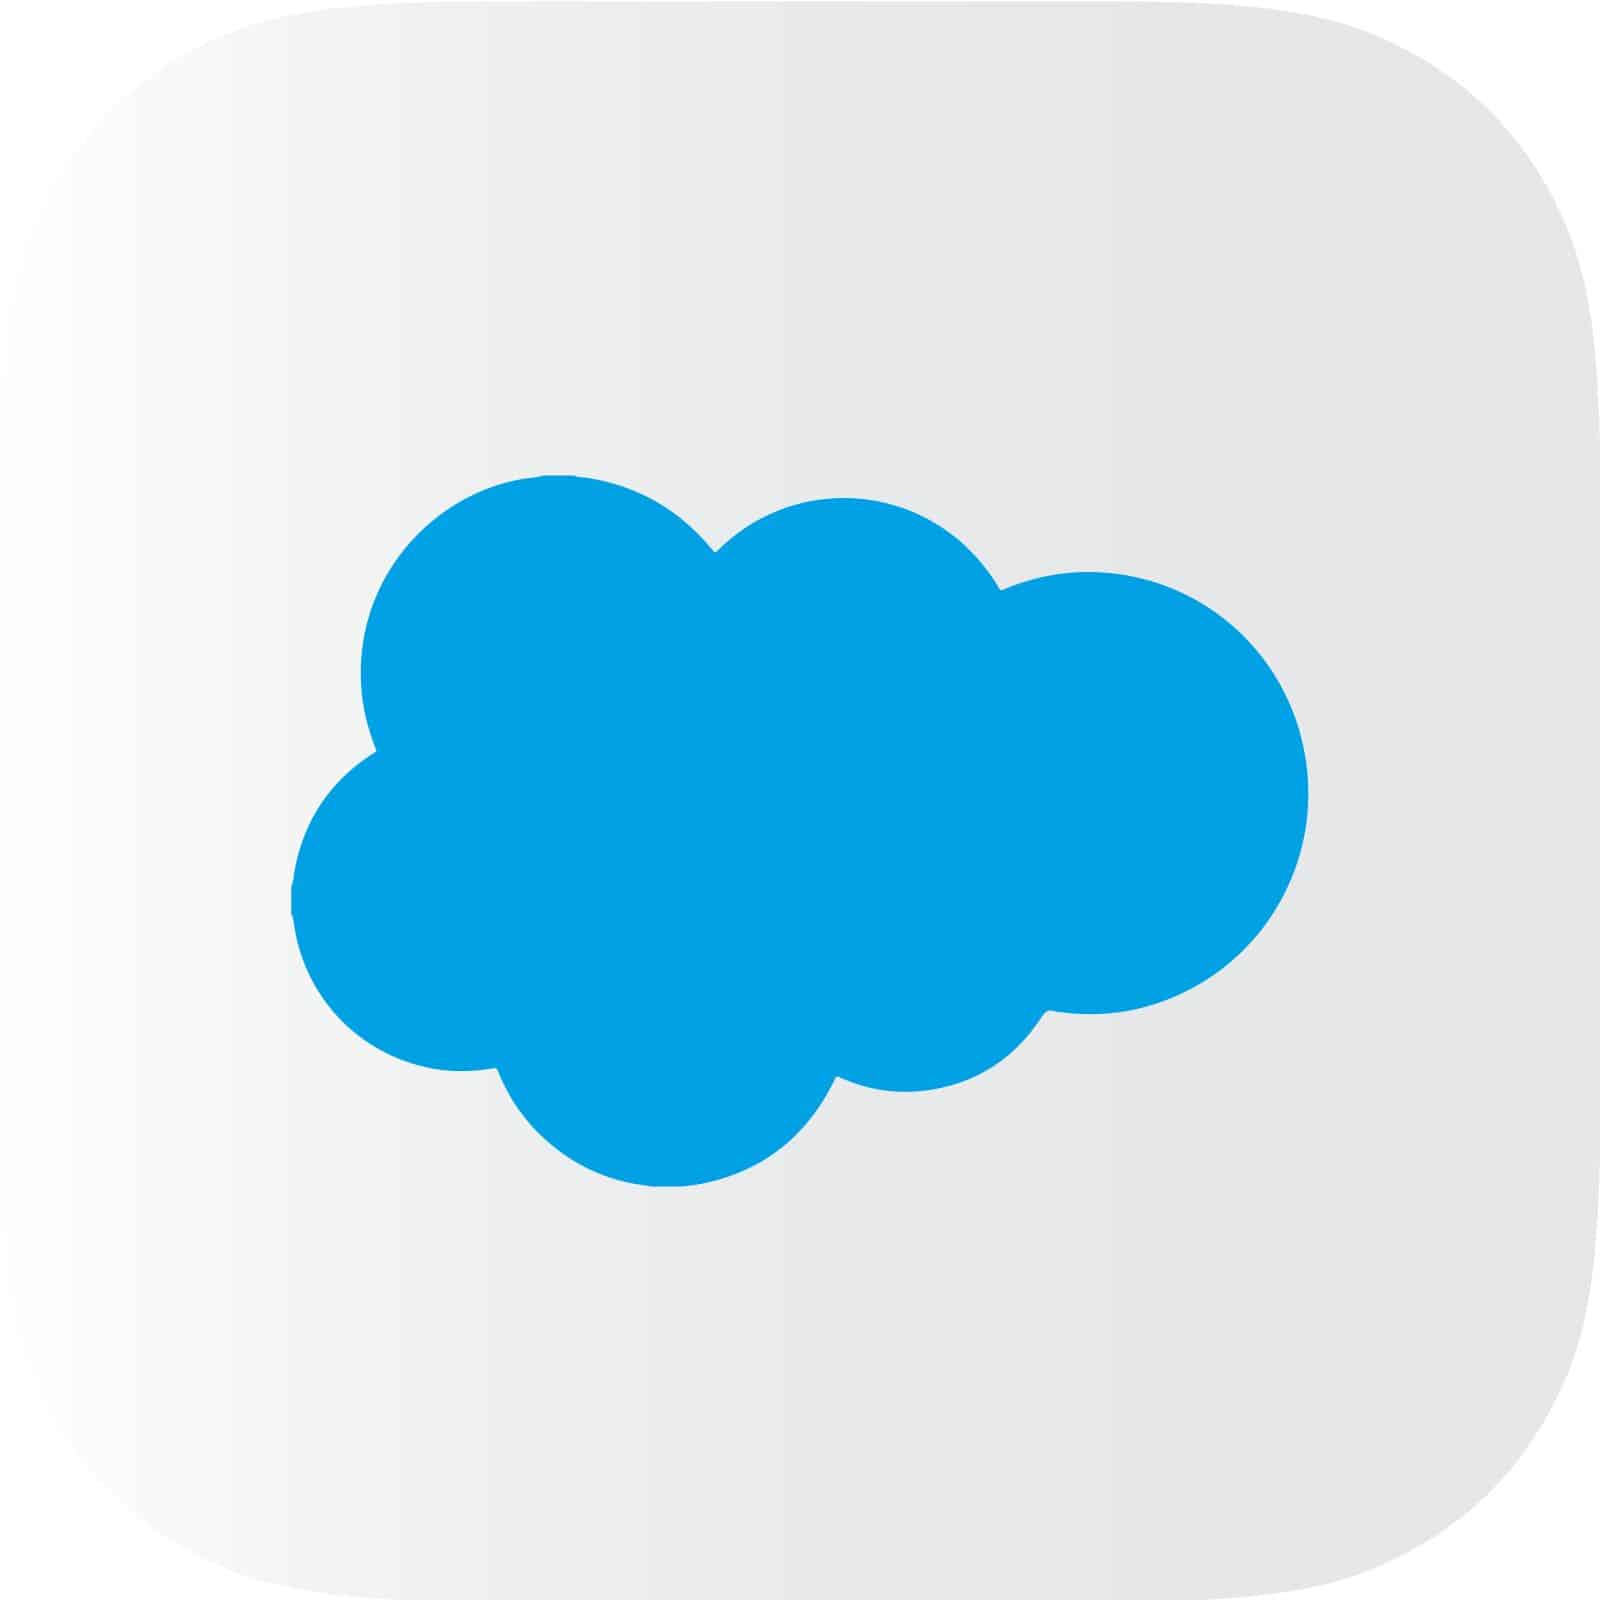 Salesforce commerce cloud logo icon